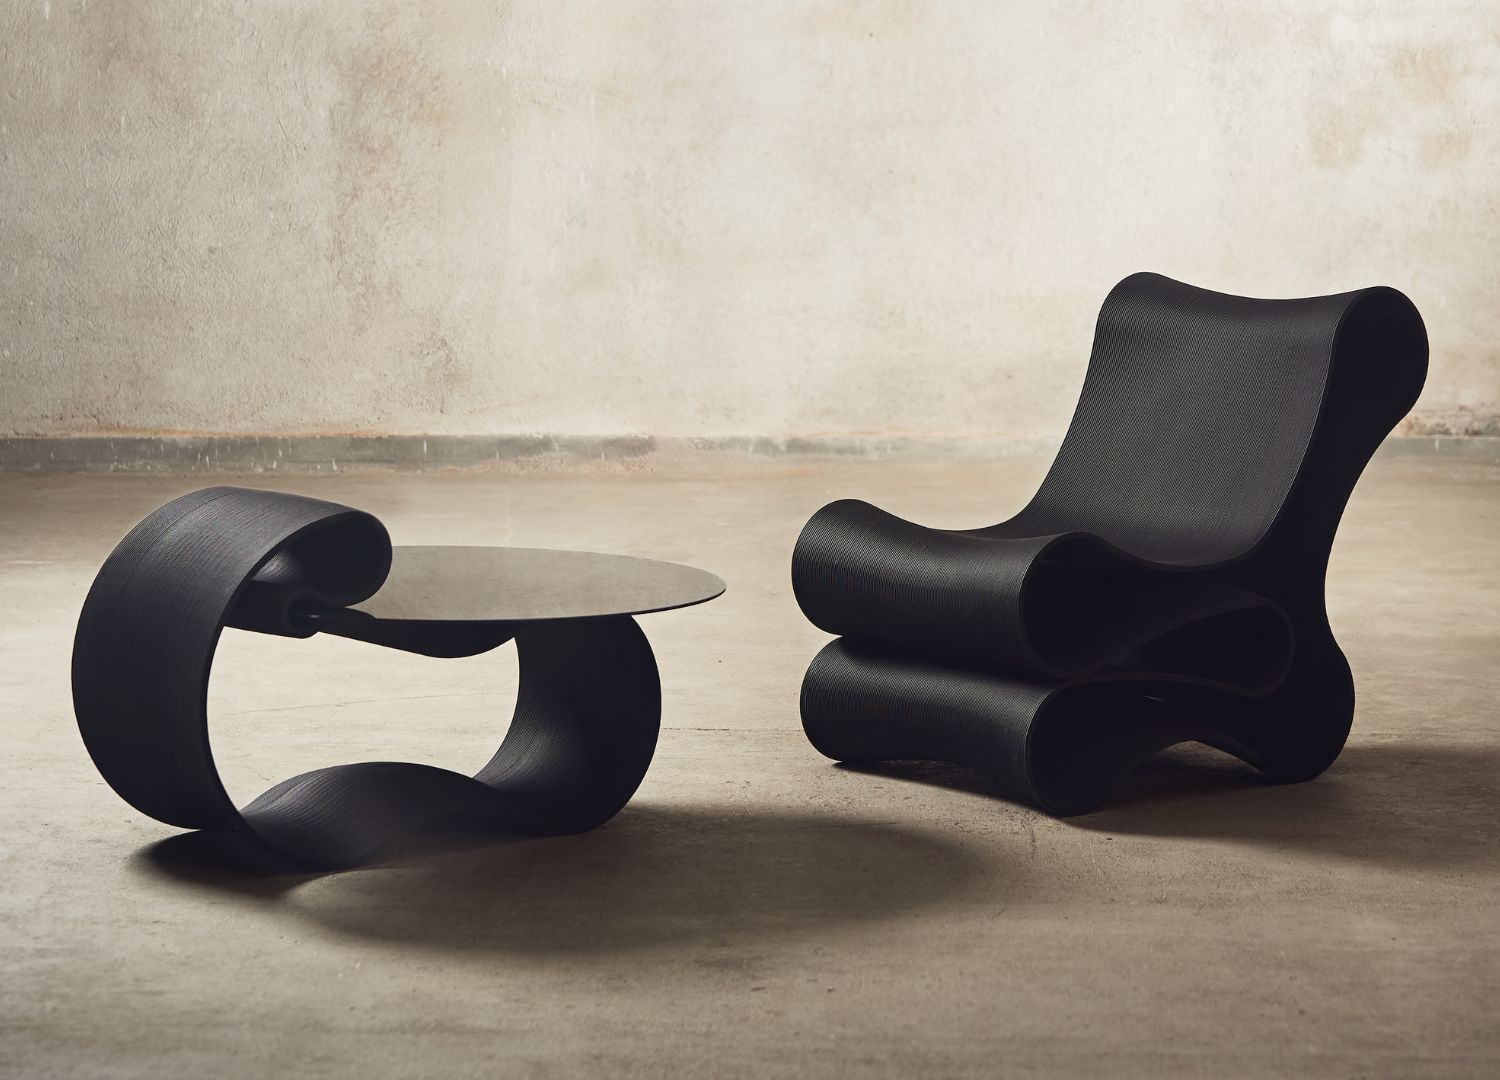 MOTIF chaise longue by Reform Design Lab - cutting-edge technology